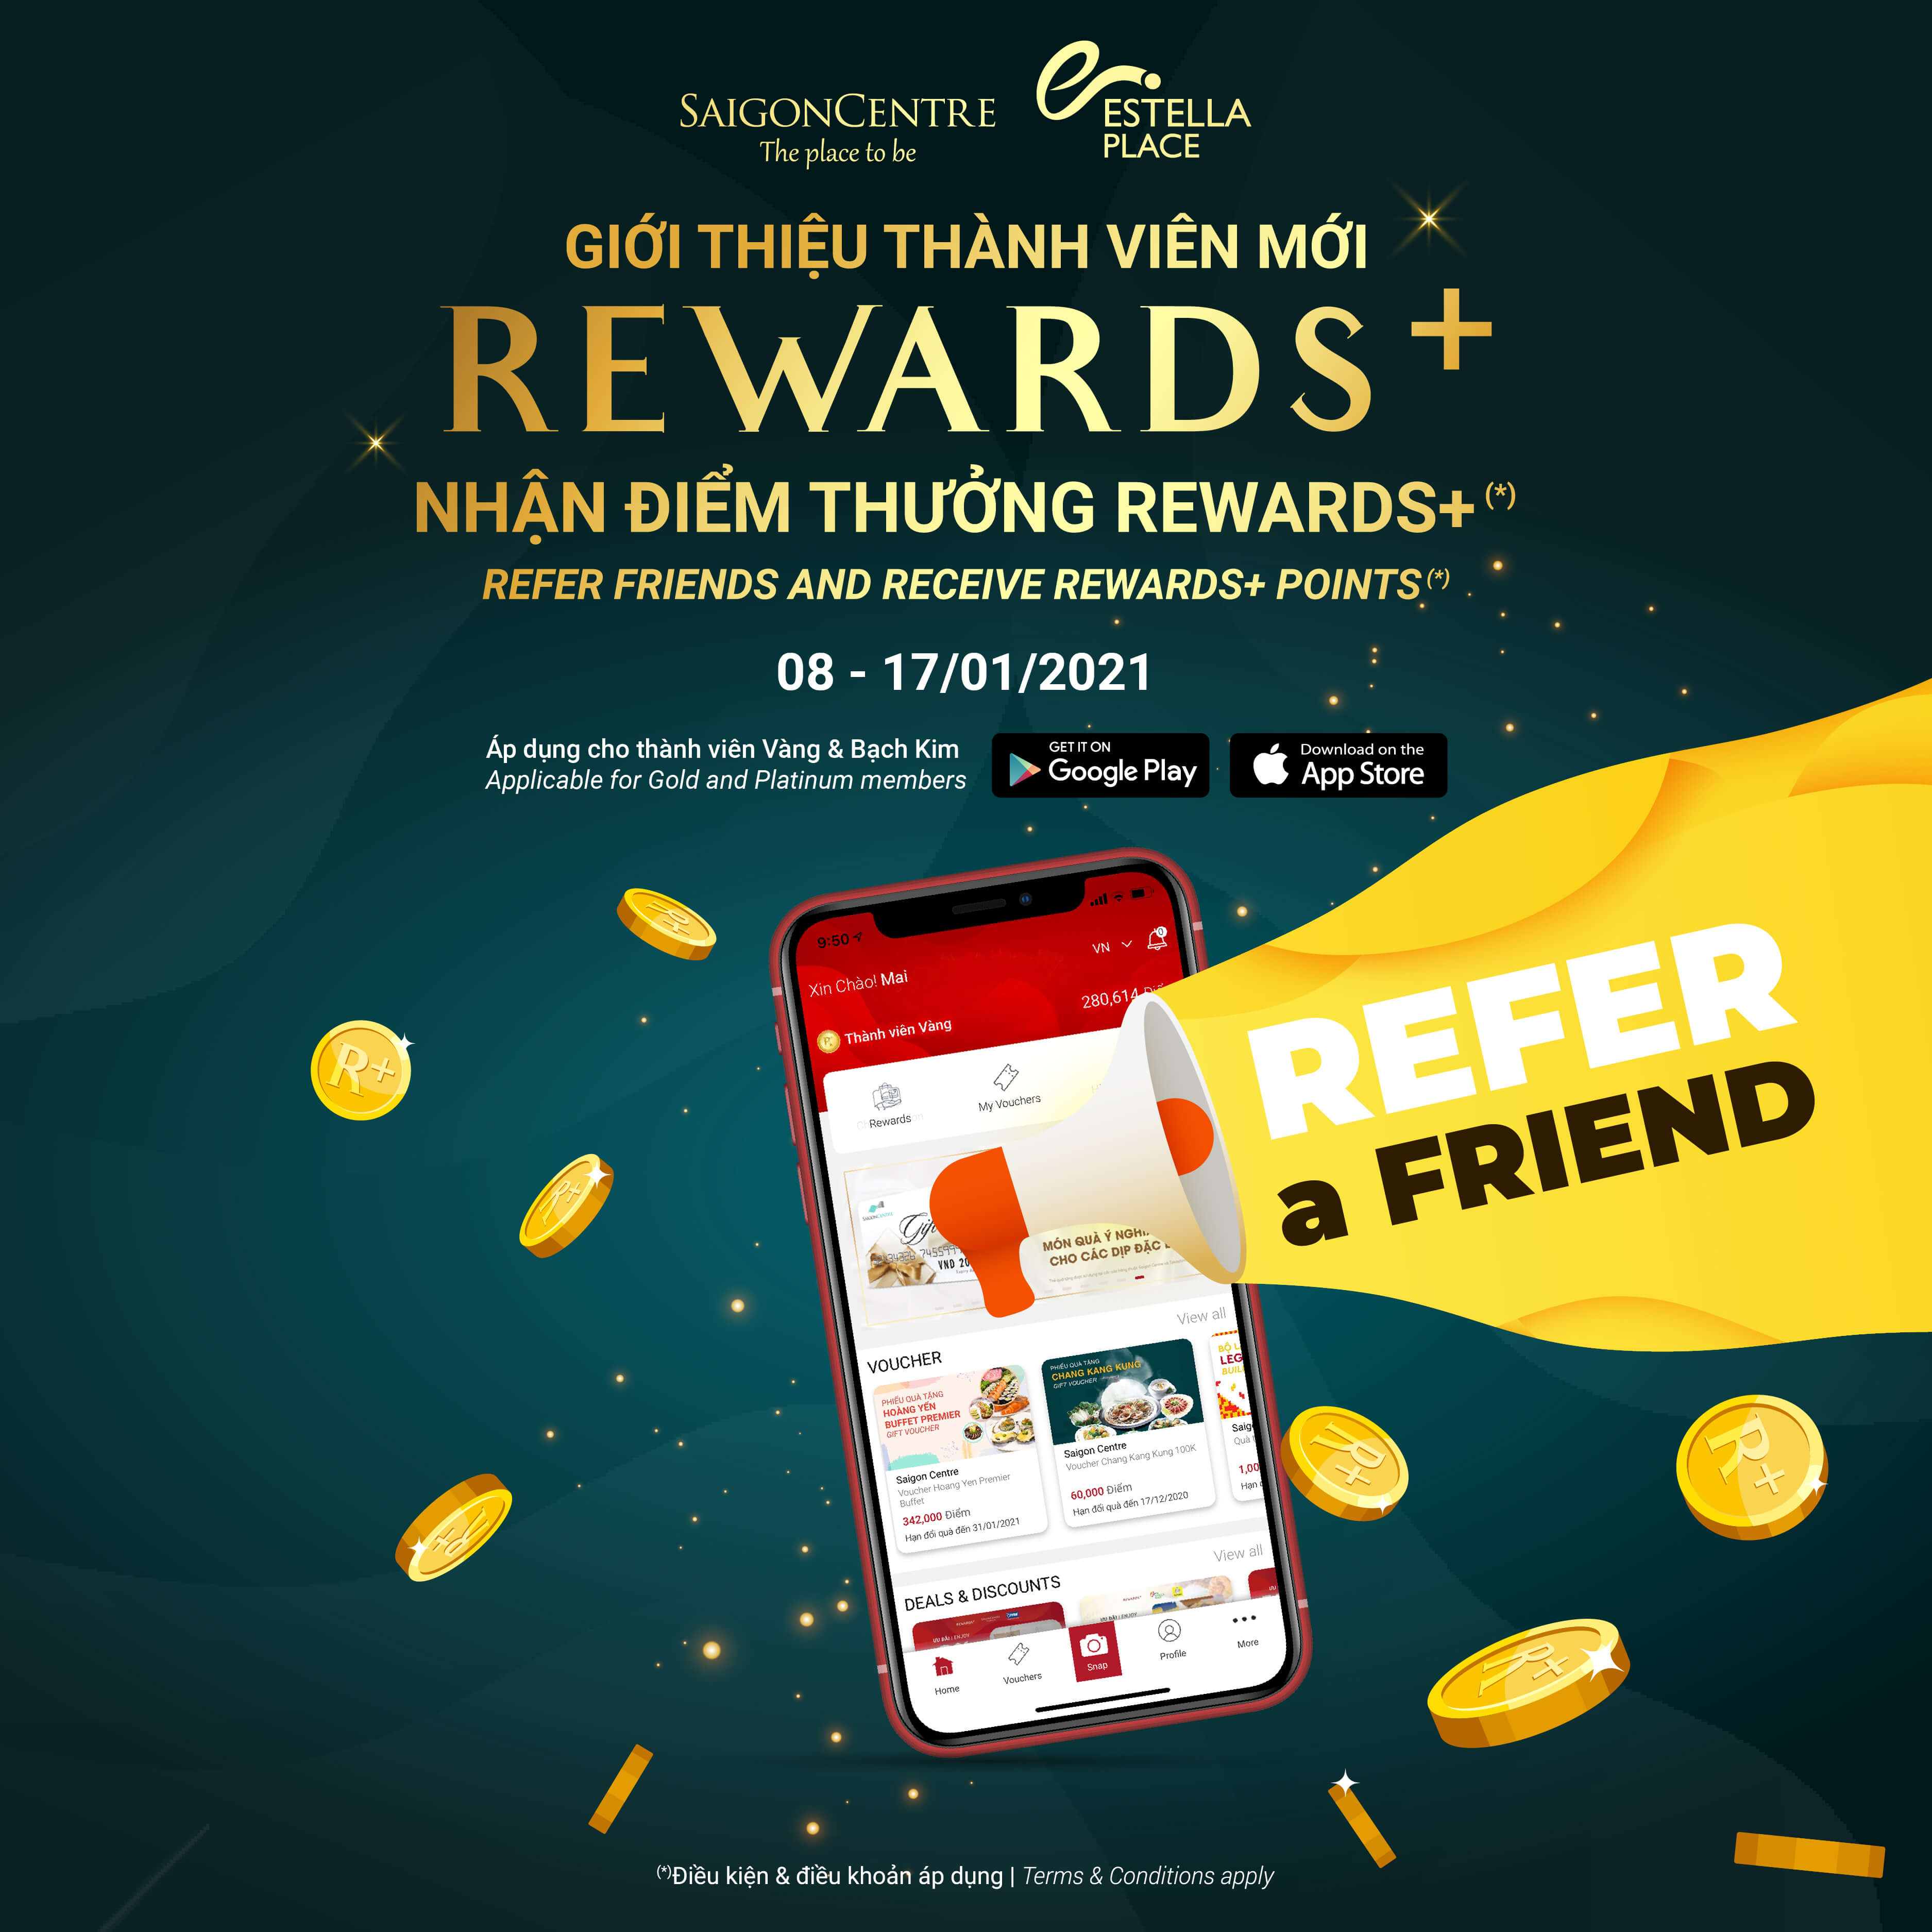 REFER FRIENDS - RECEIVE REWARDS+ POINTS